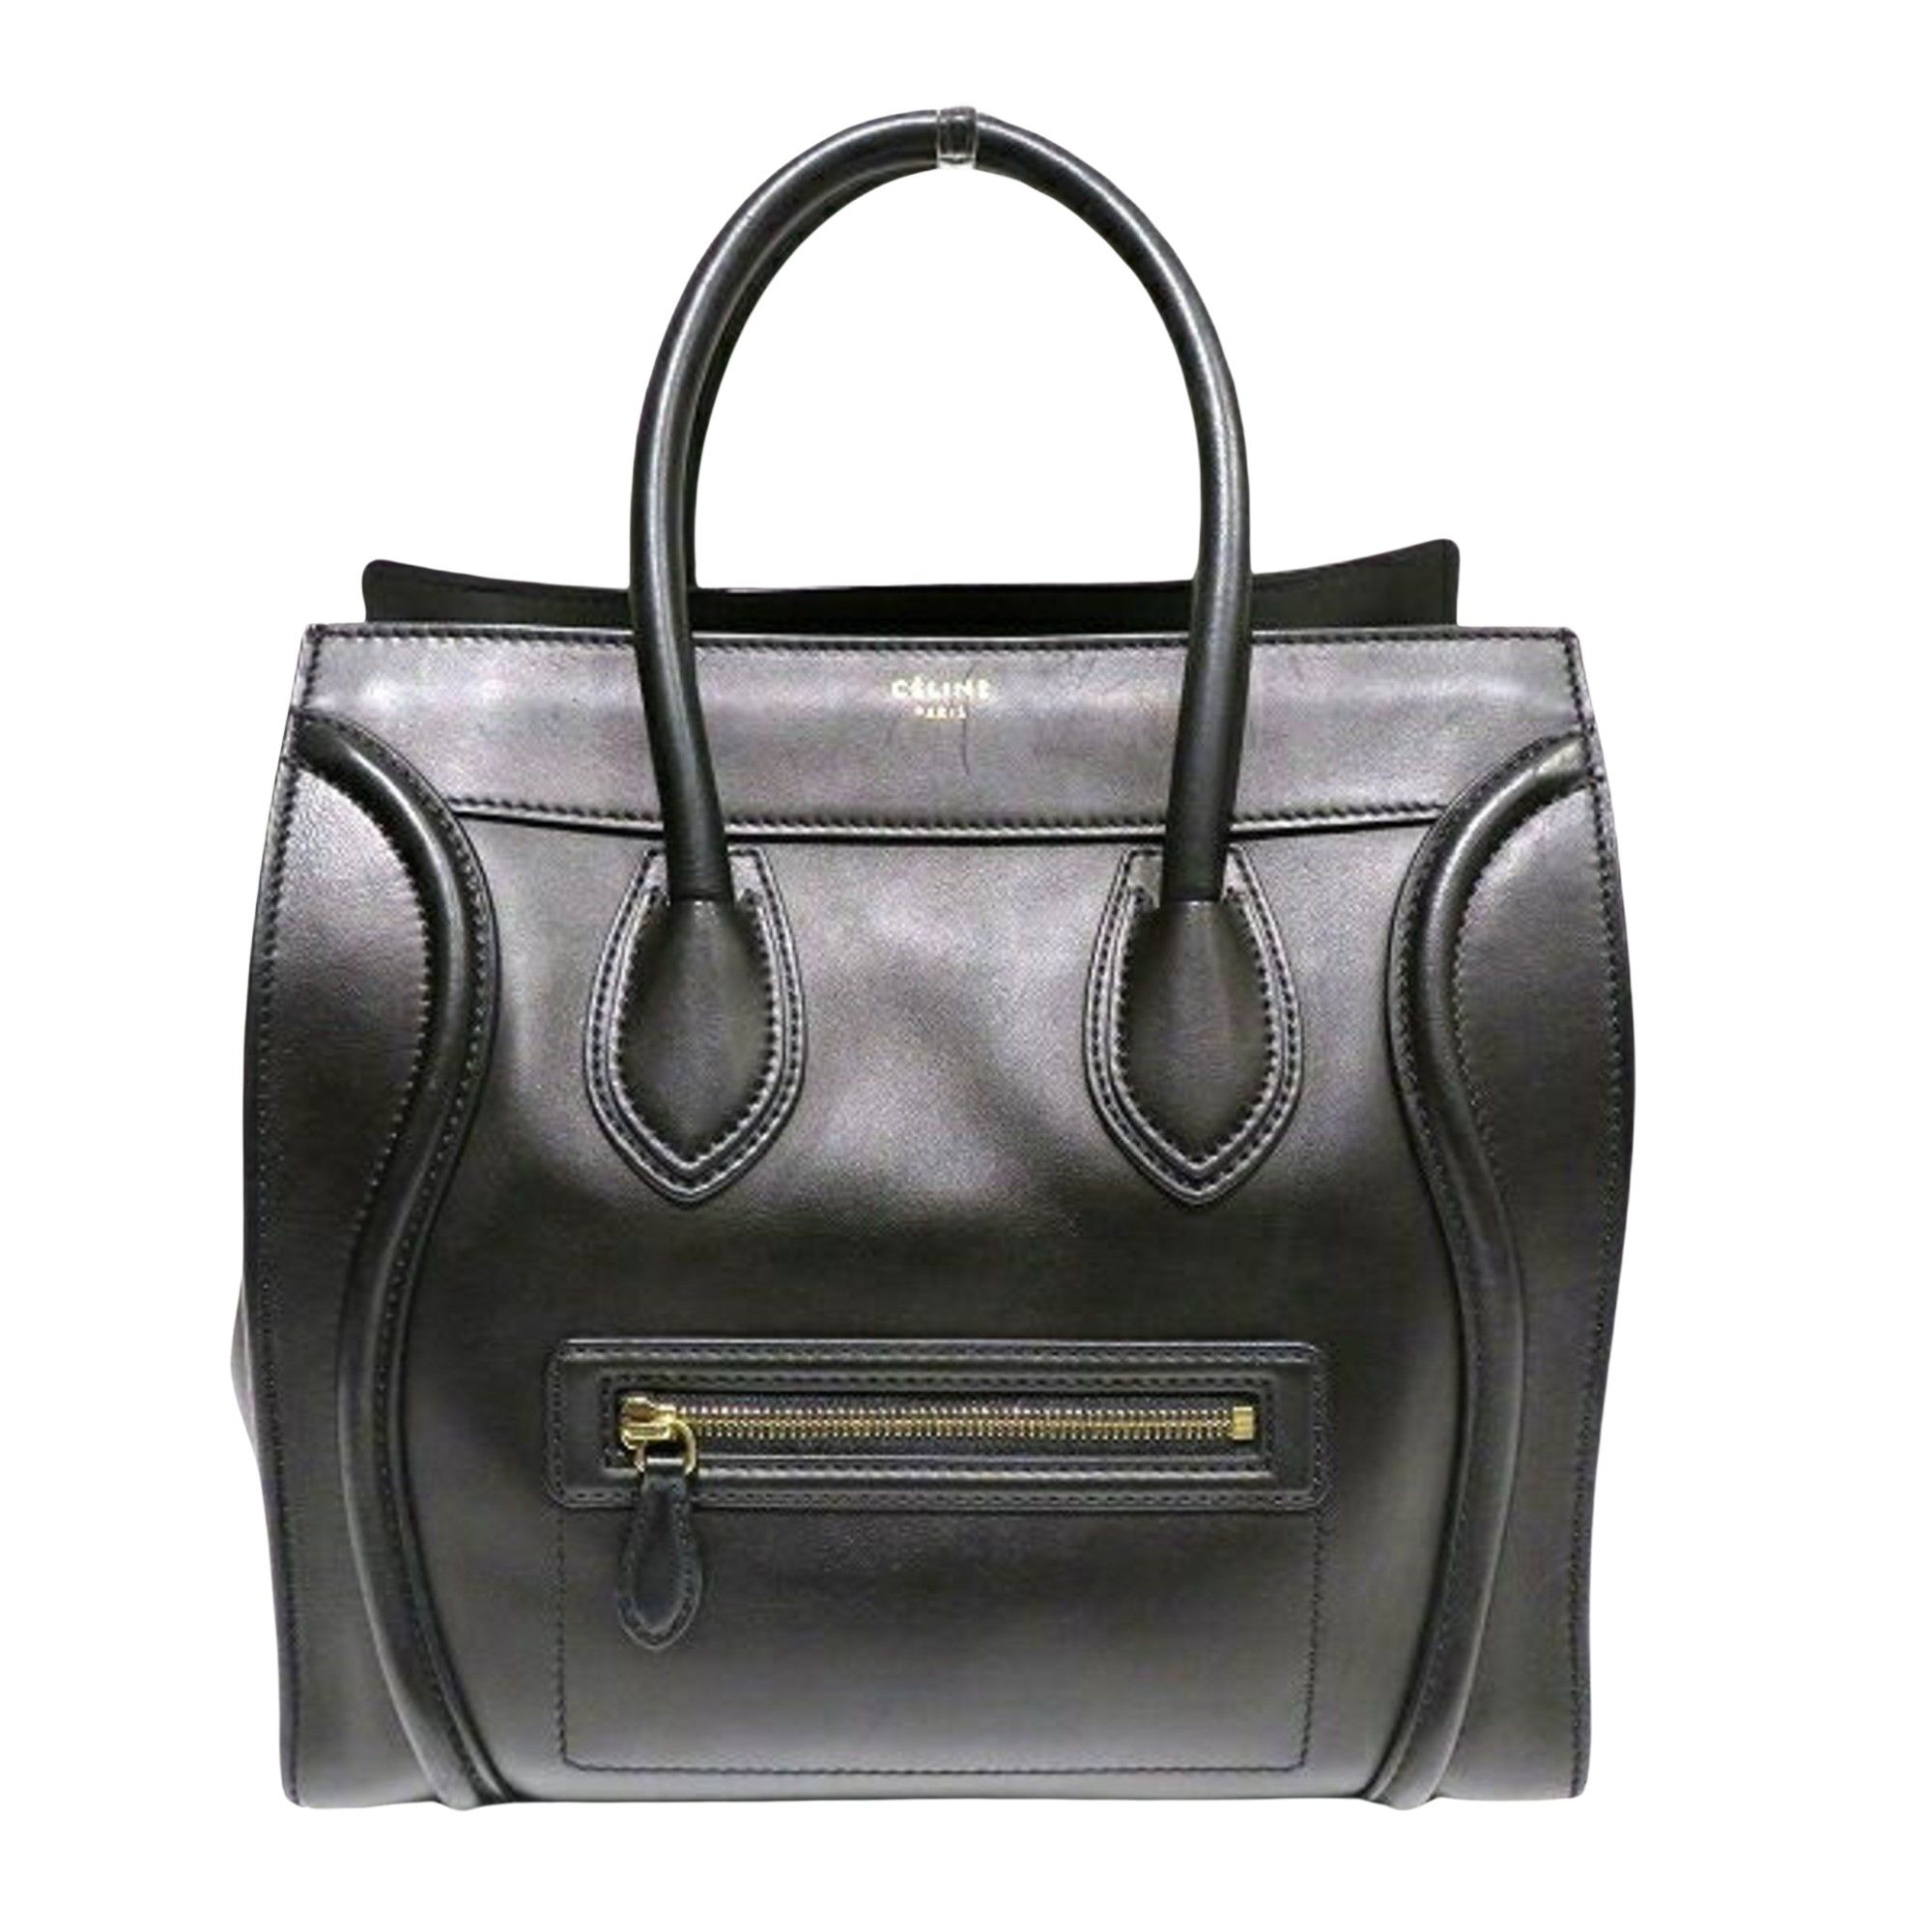 image of Celine Céline Luggage Handbag in Black, Women's